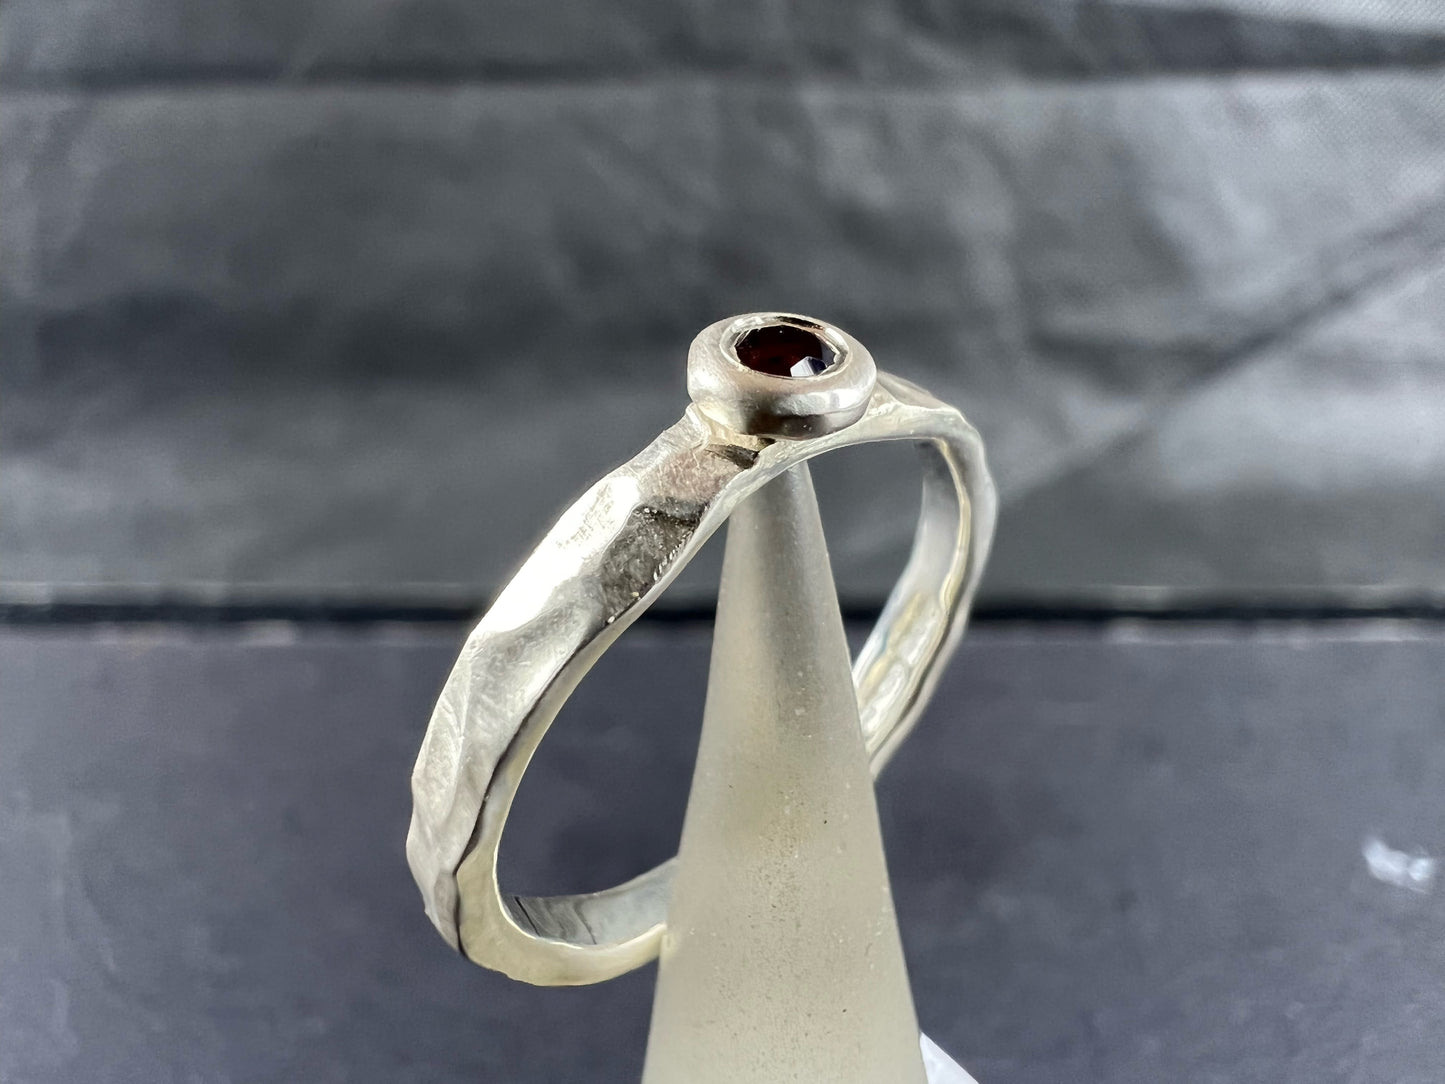 Kelly-Hopkins, Deborah – Silver ring with garnet